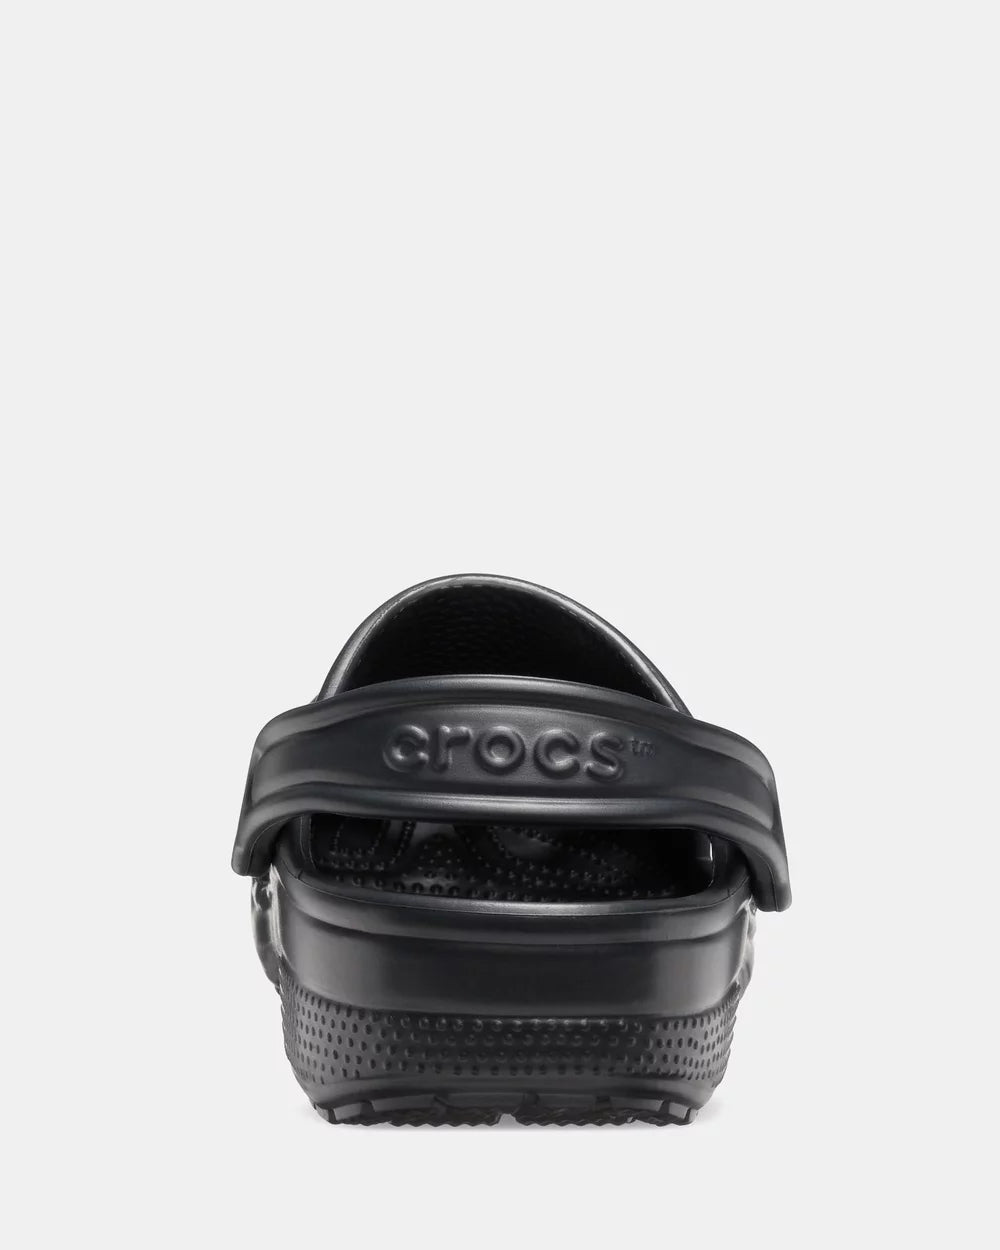 Crocs Classic Black Waterproof Shoes Comfy 